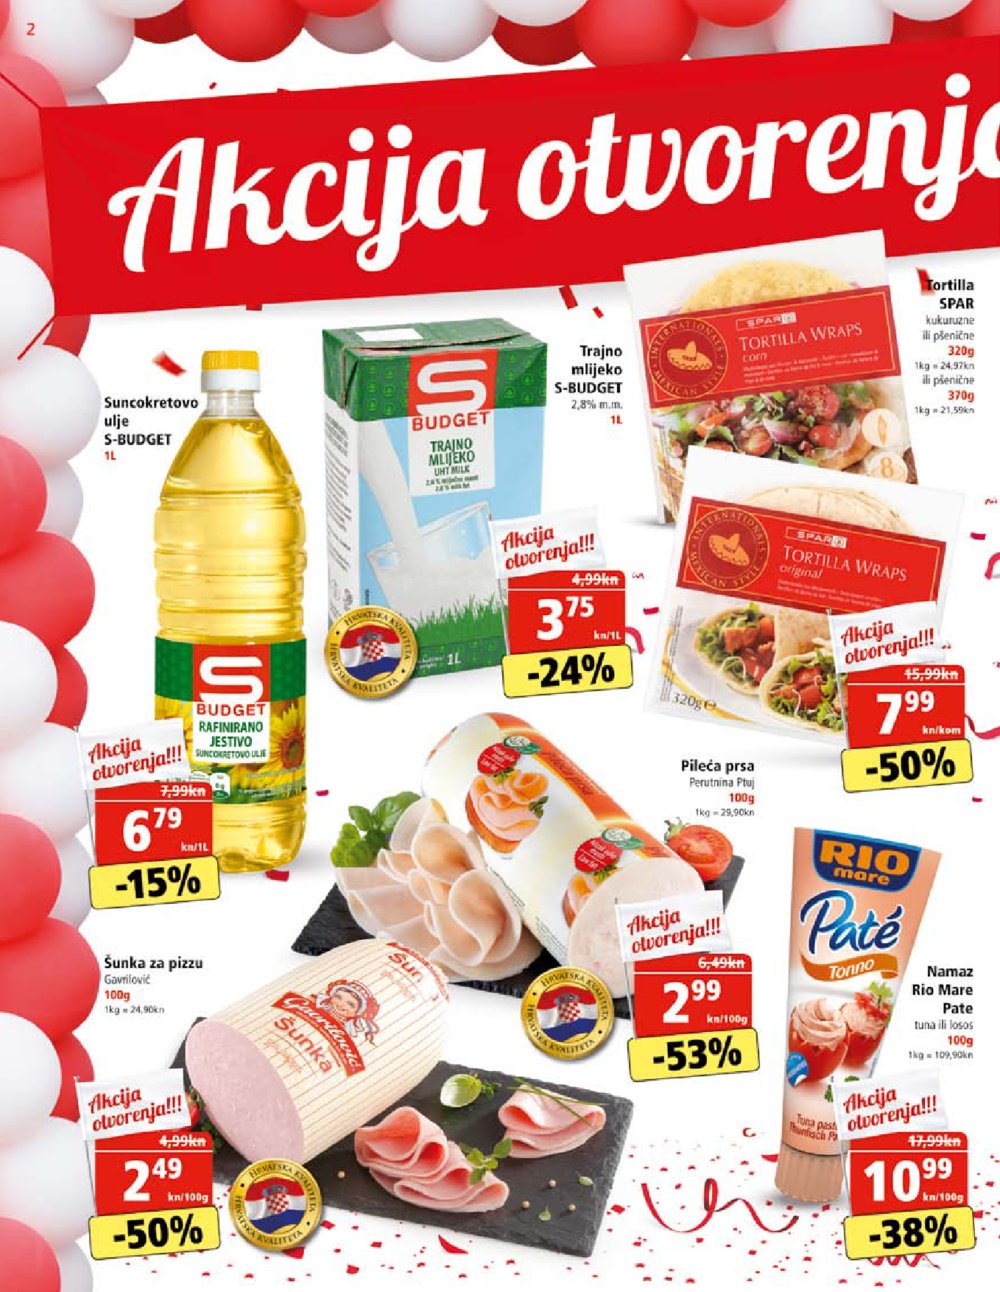 Spar katalog Otvorenje supermarketa Buje 23.07.-04.08.2020.